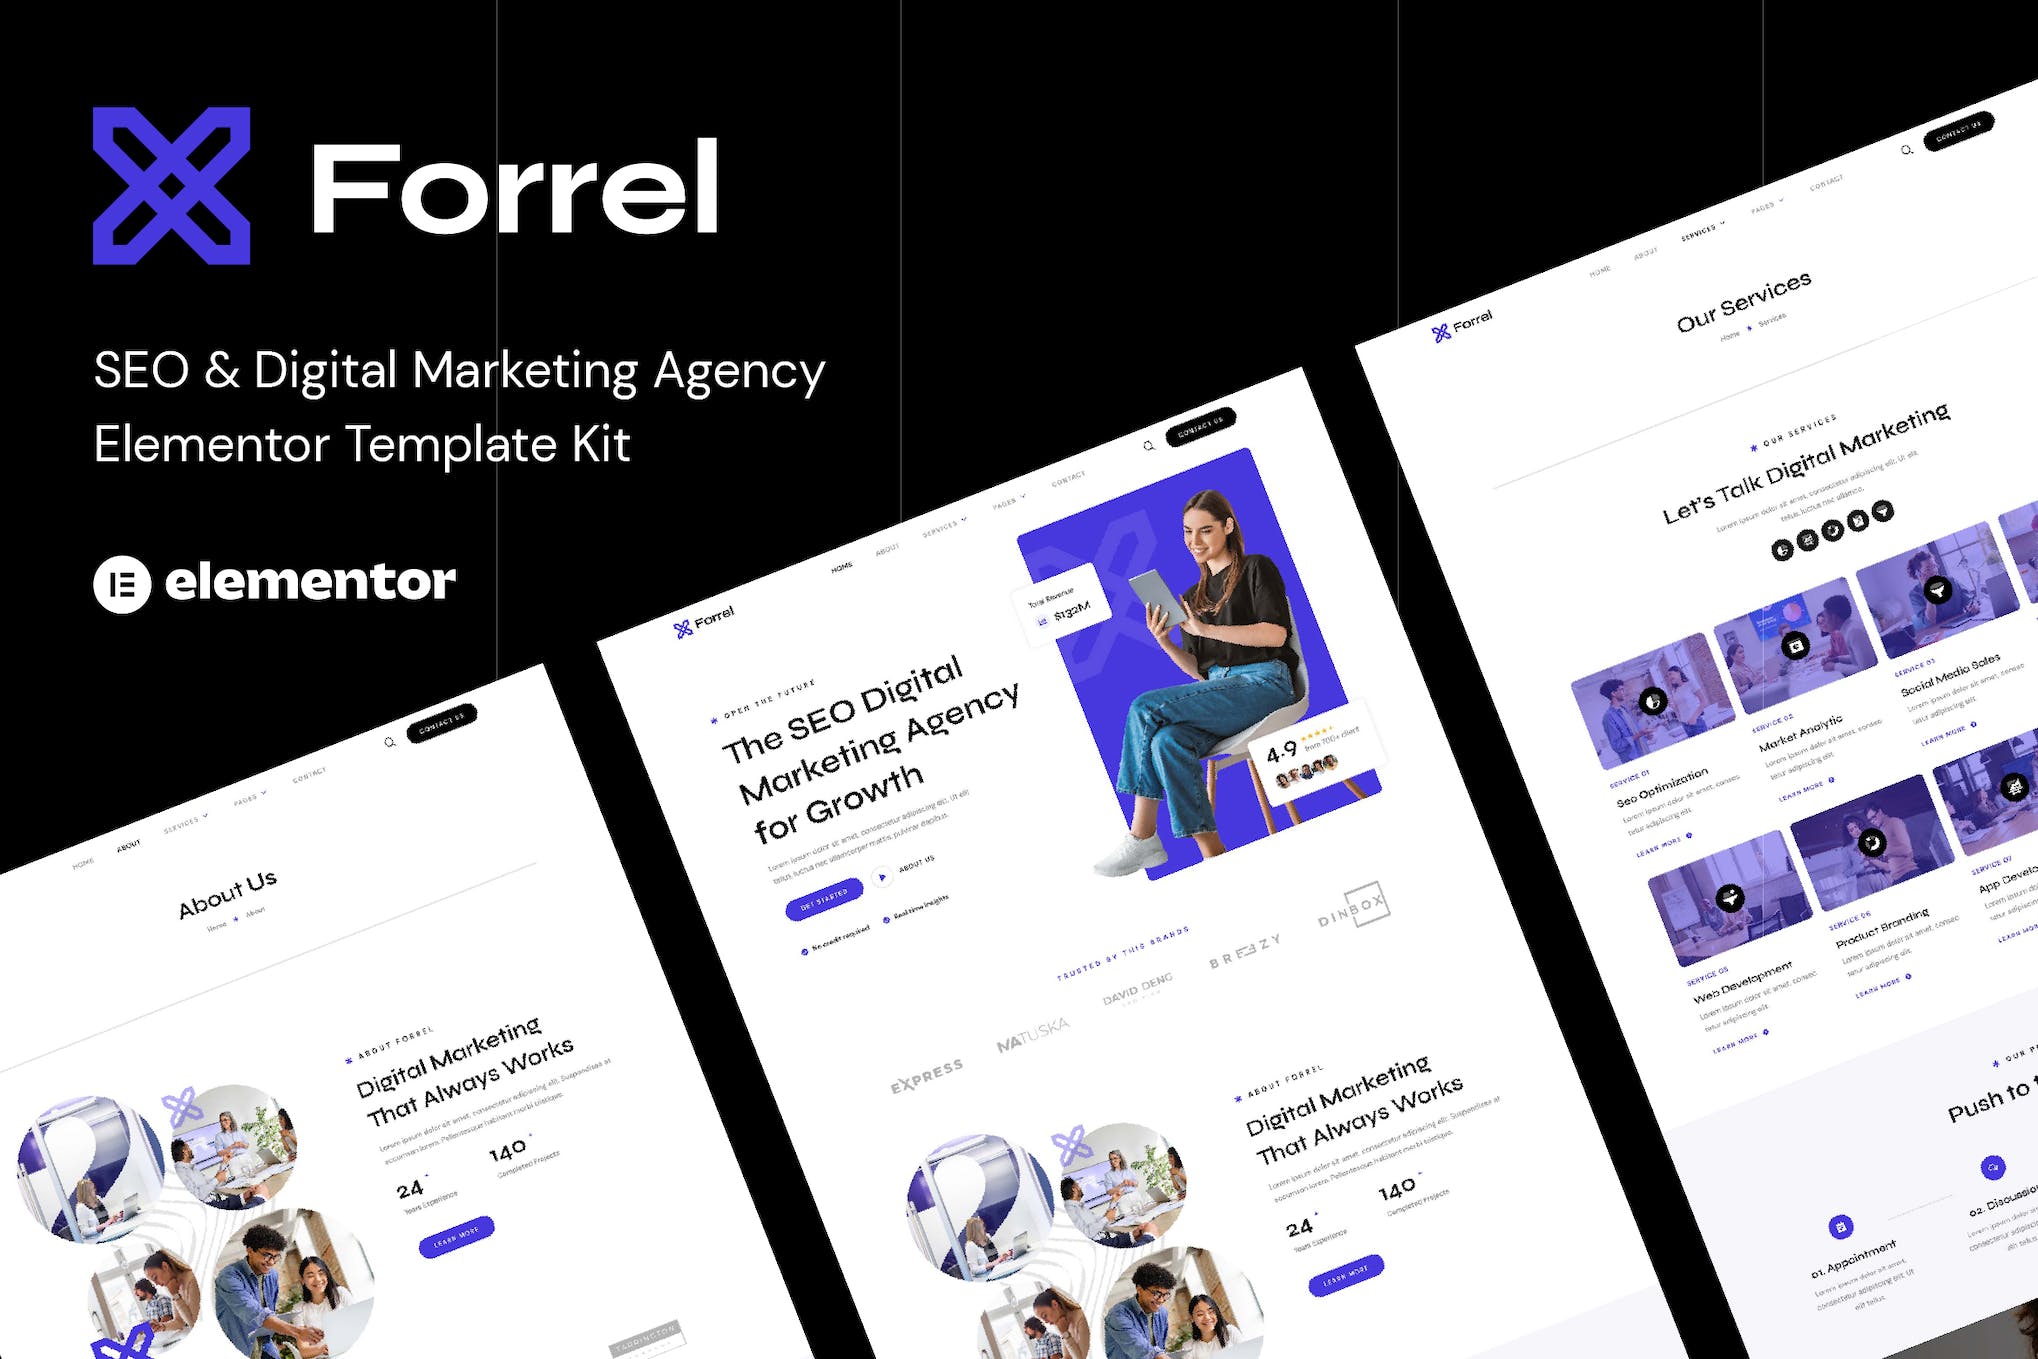 Forrel - SEO & Digital Marketing Agency Elementor Template Kit